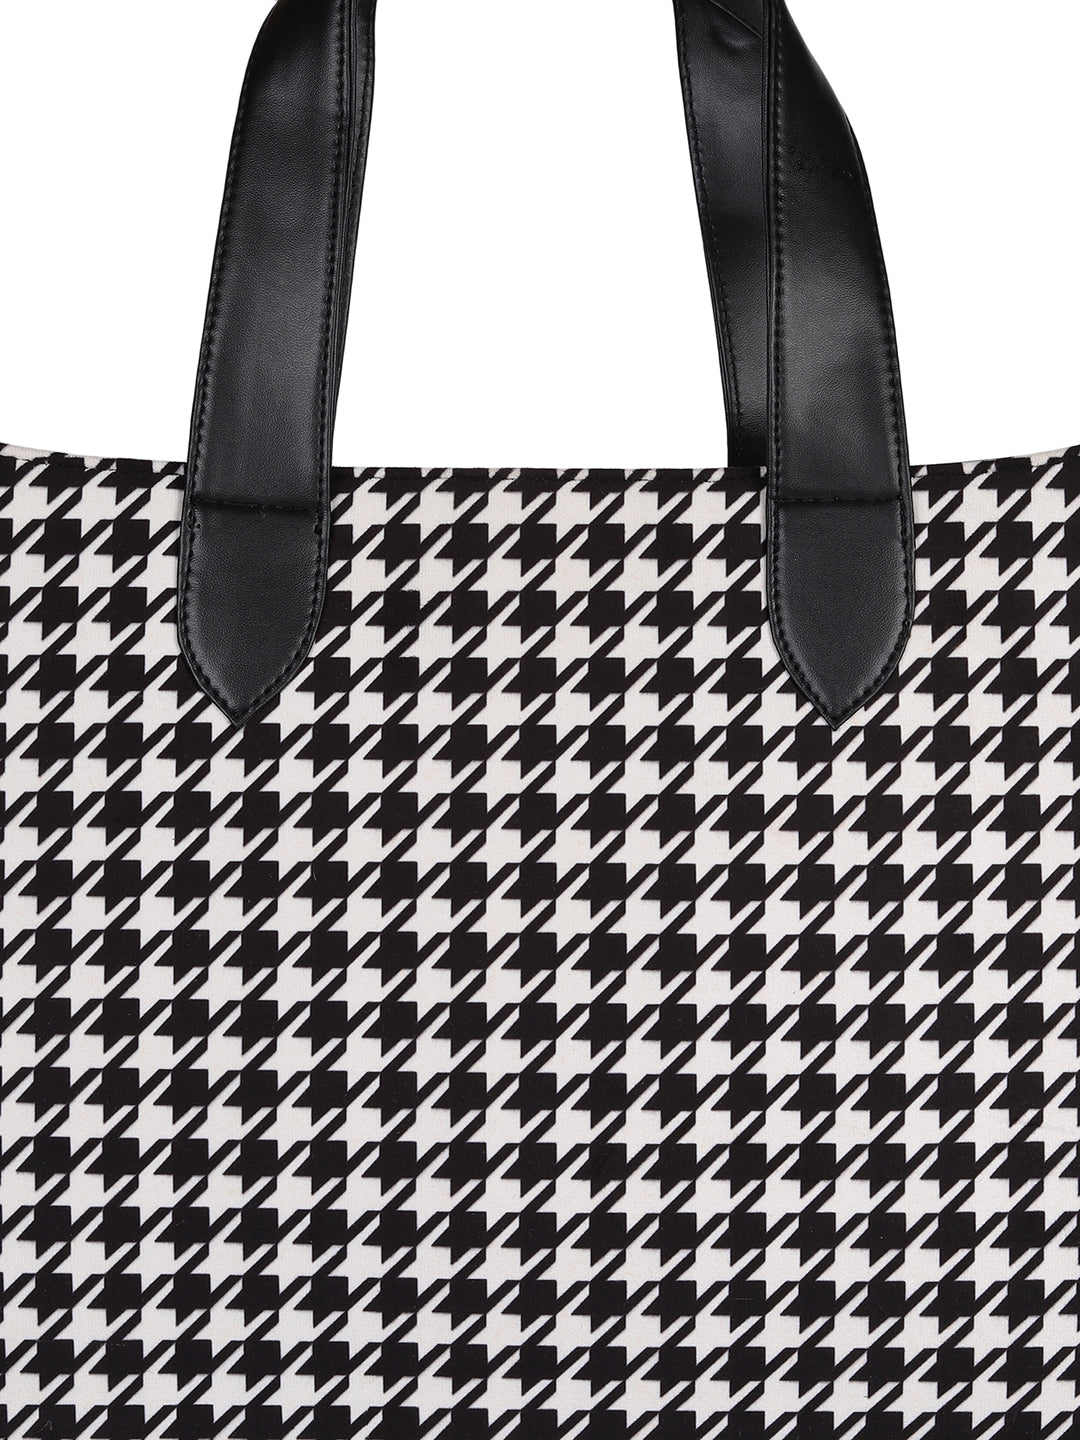 MINI WESST Black And White Textured Tote Bag(MWTB097MH)